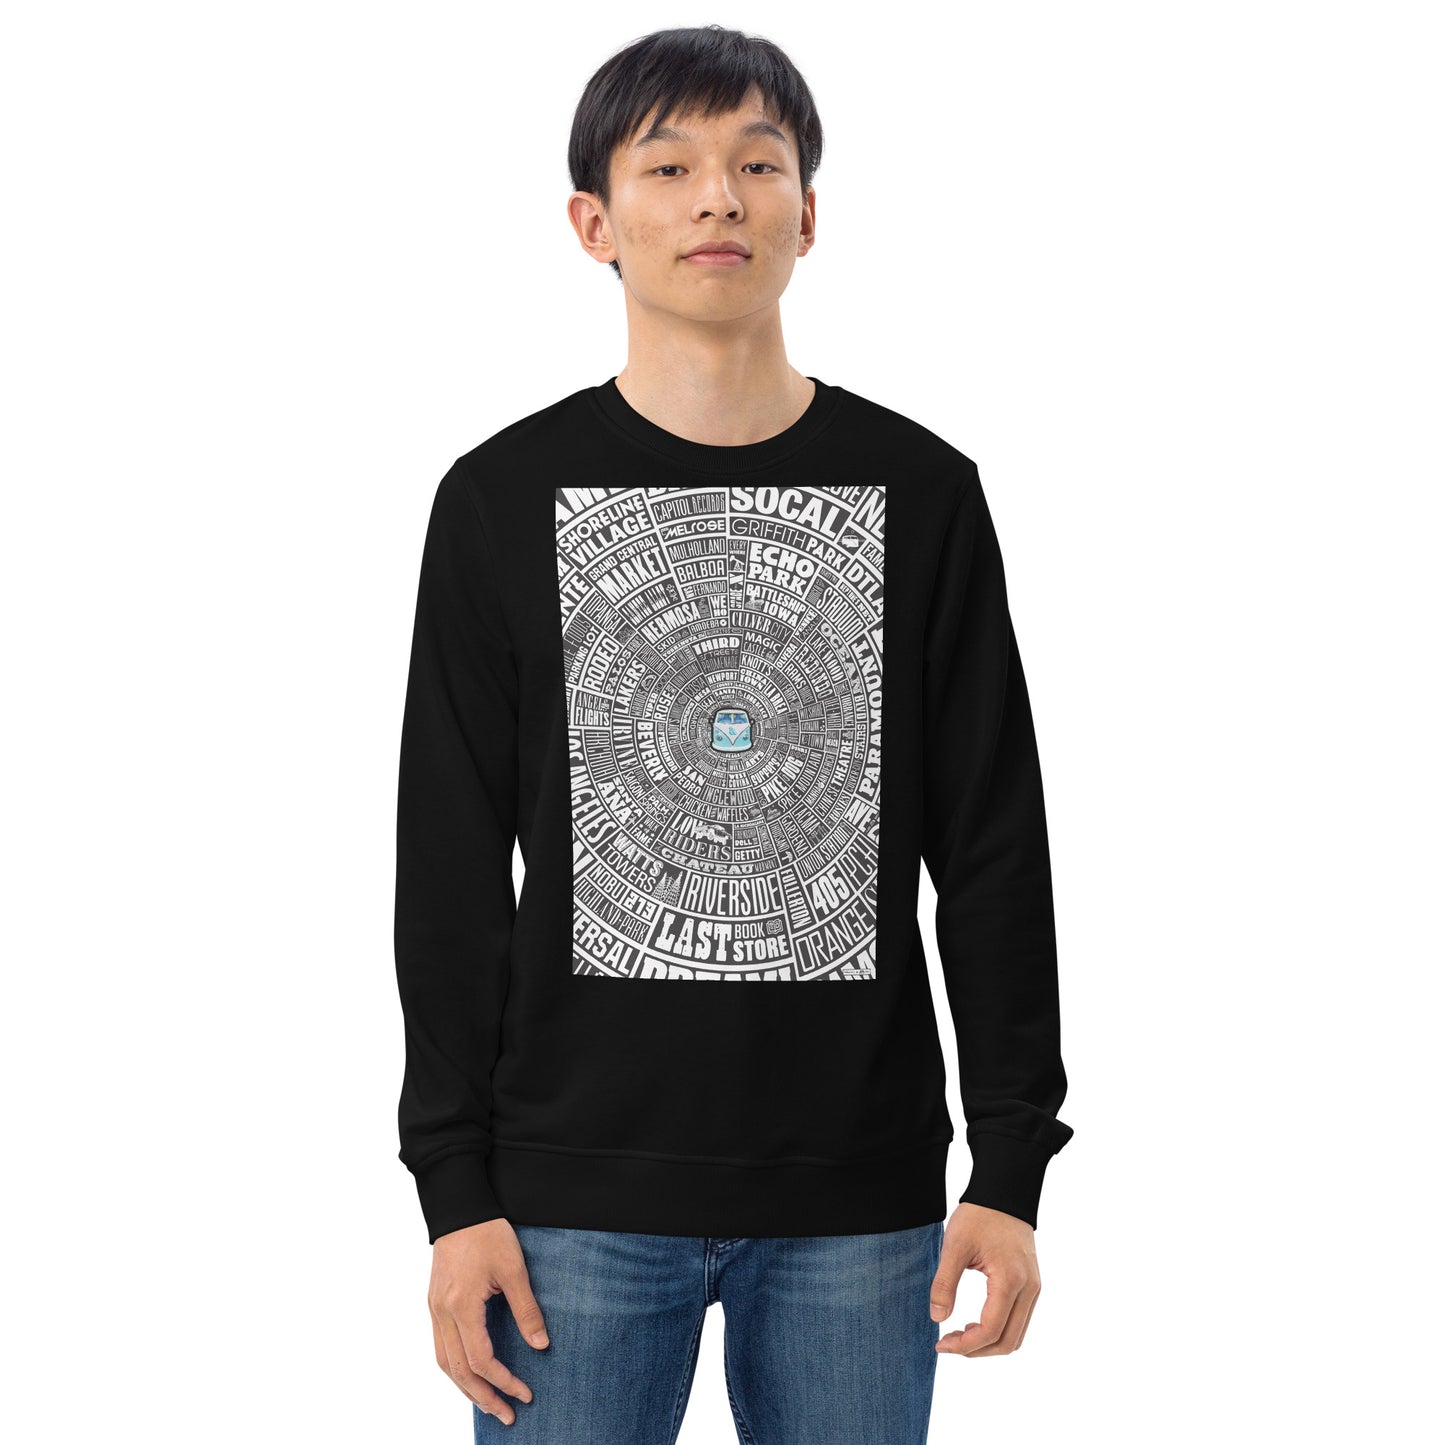 Los Angeles Type Wheel - Sweater - Black Bkg